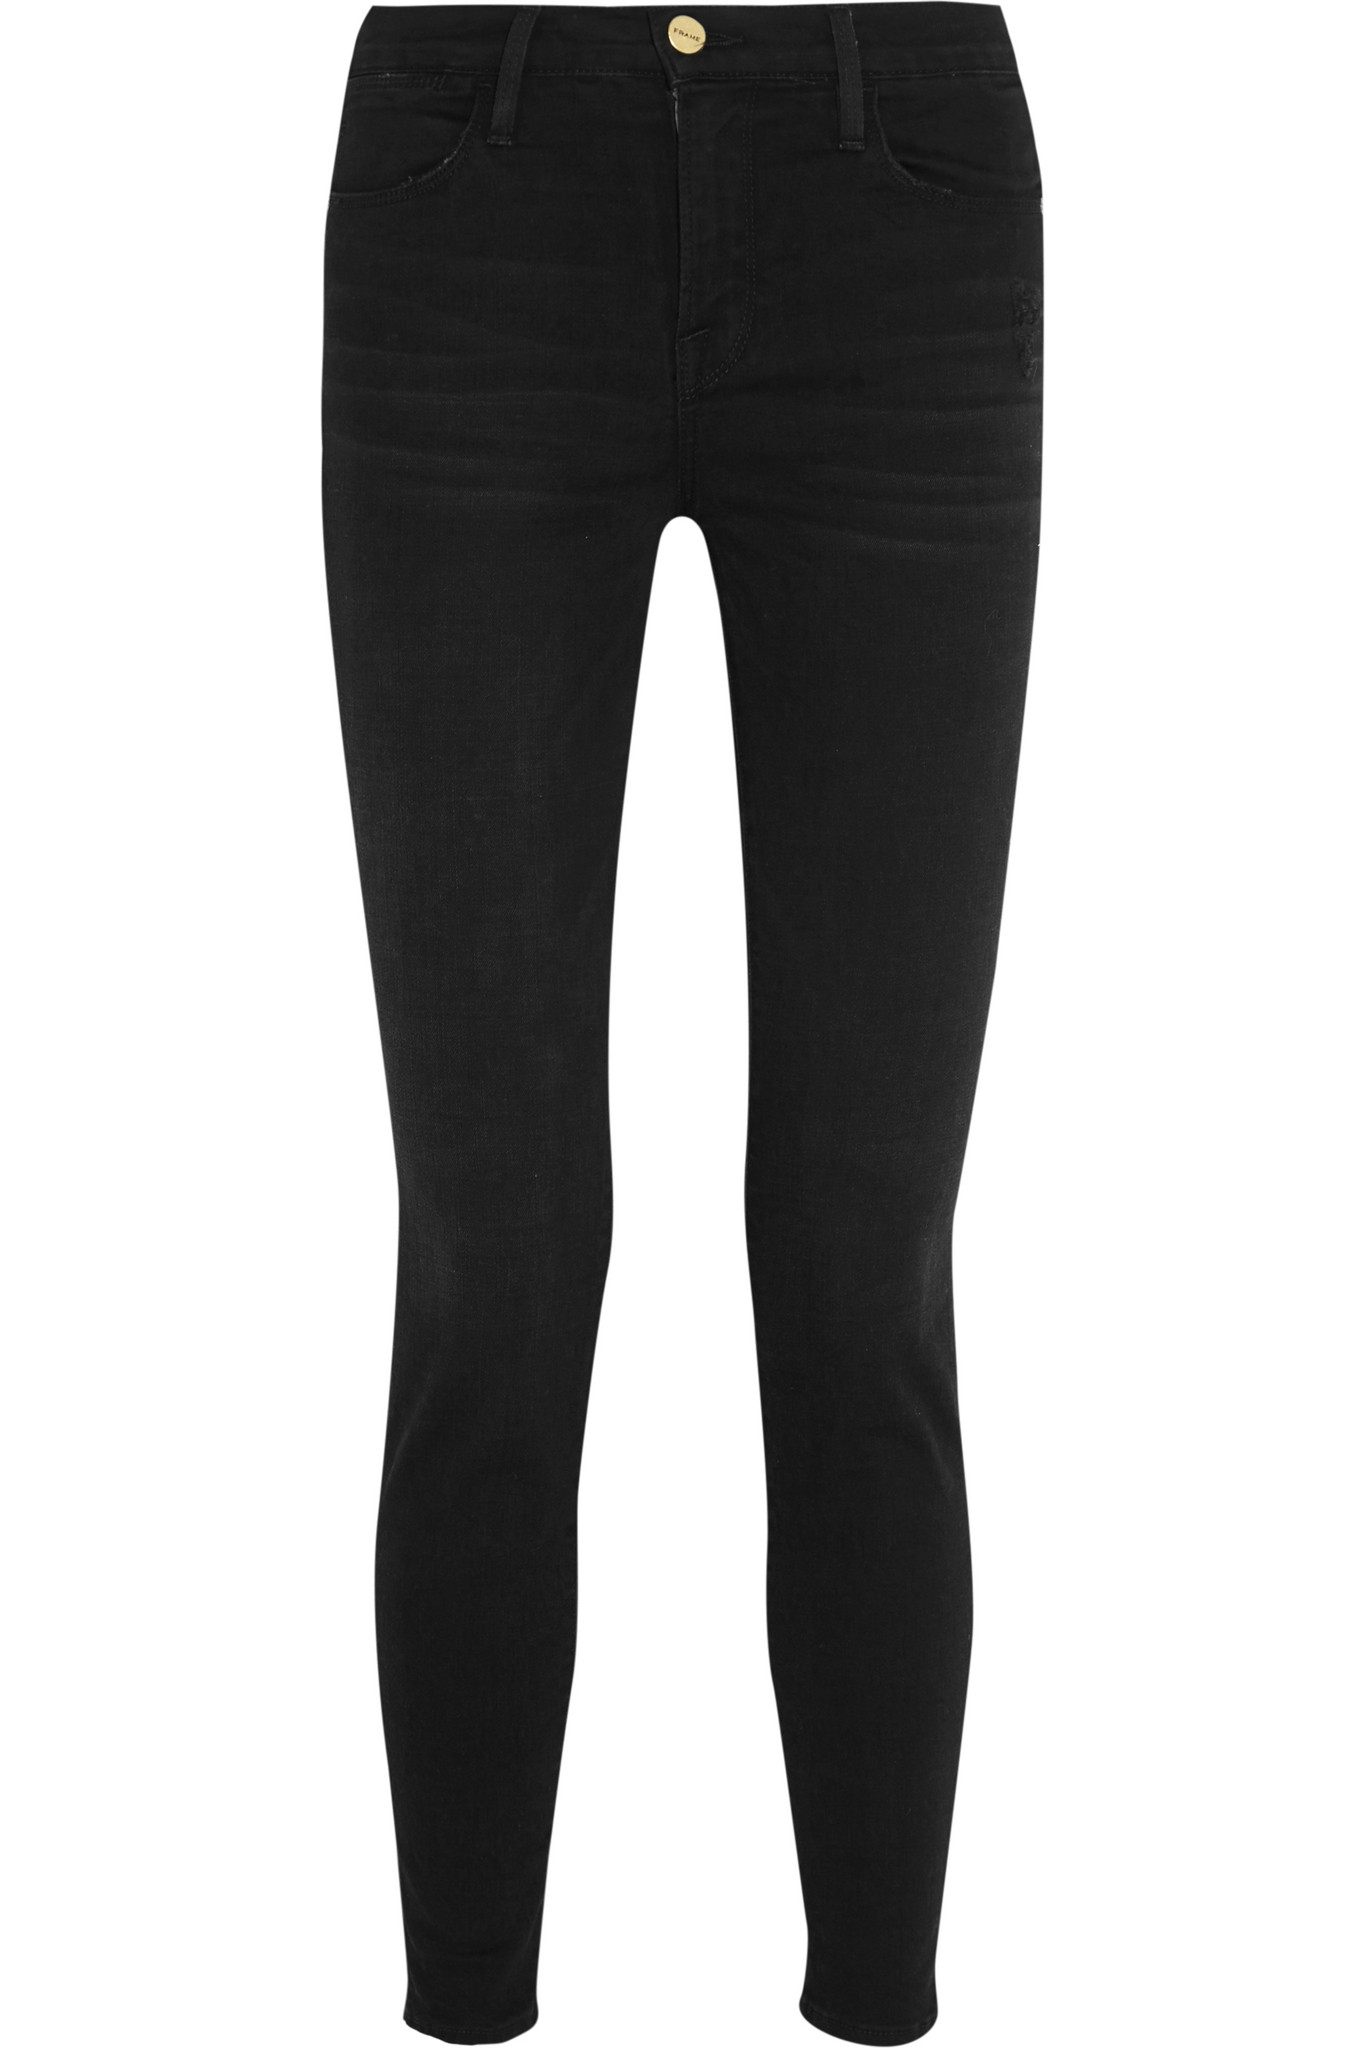 frame denim black jeans